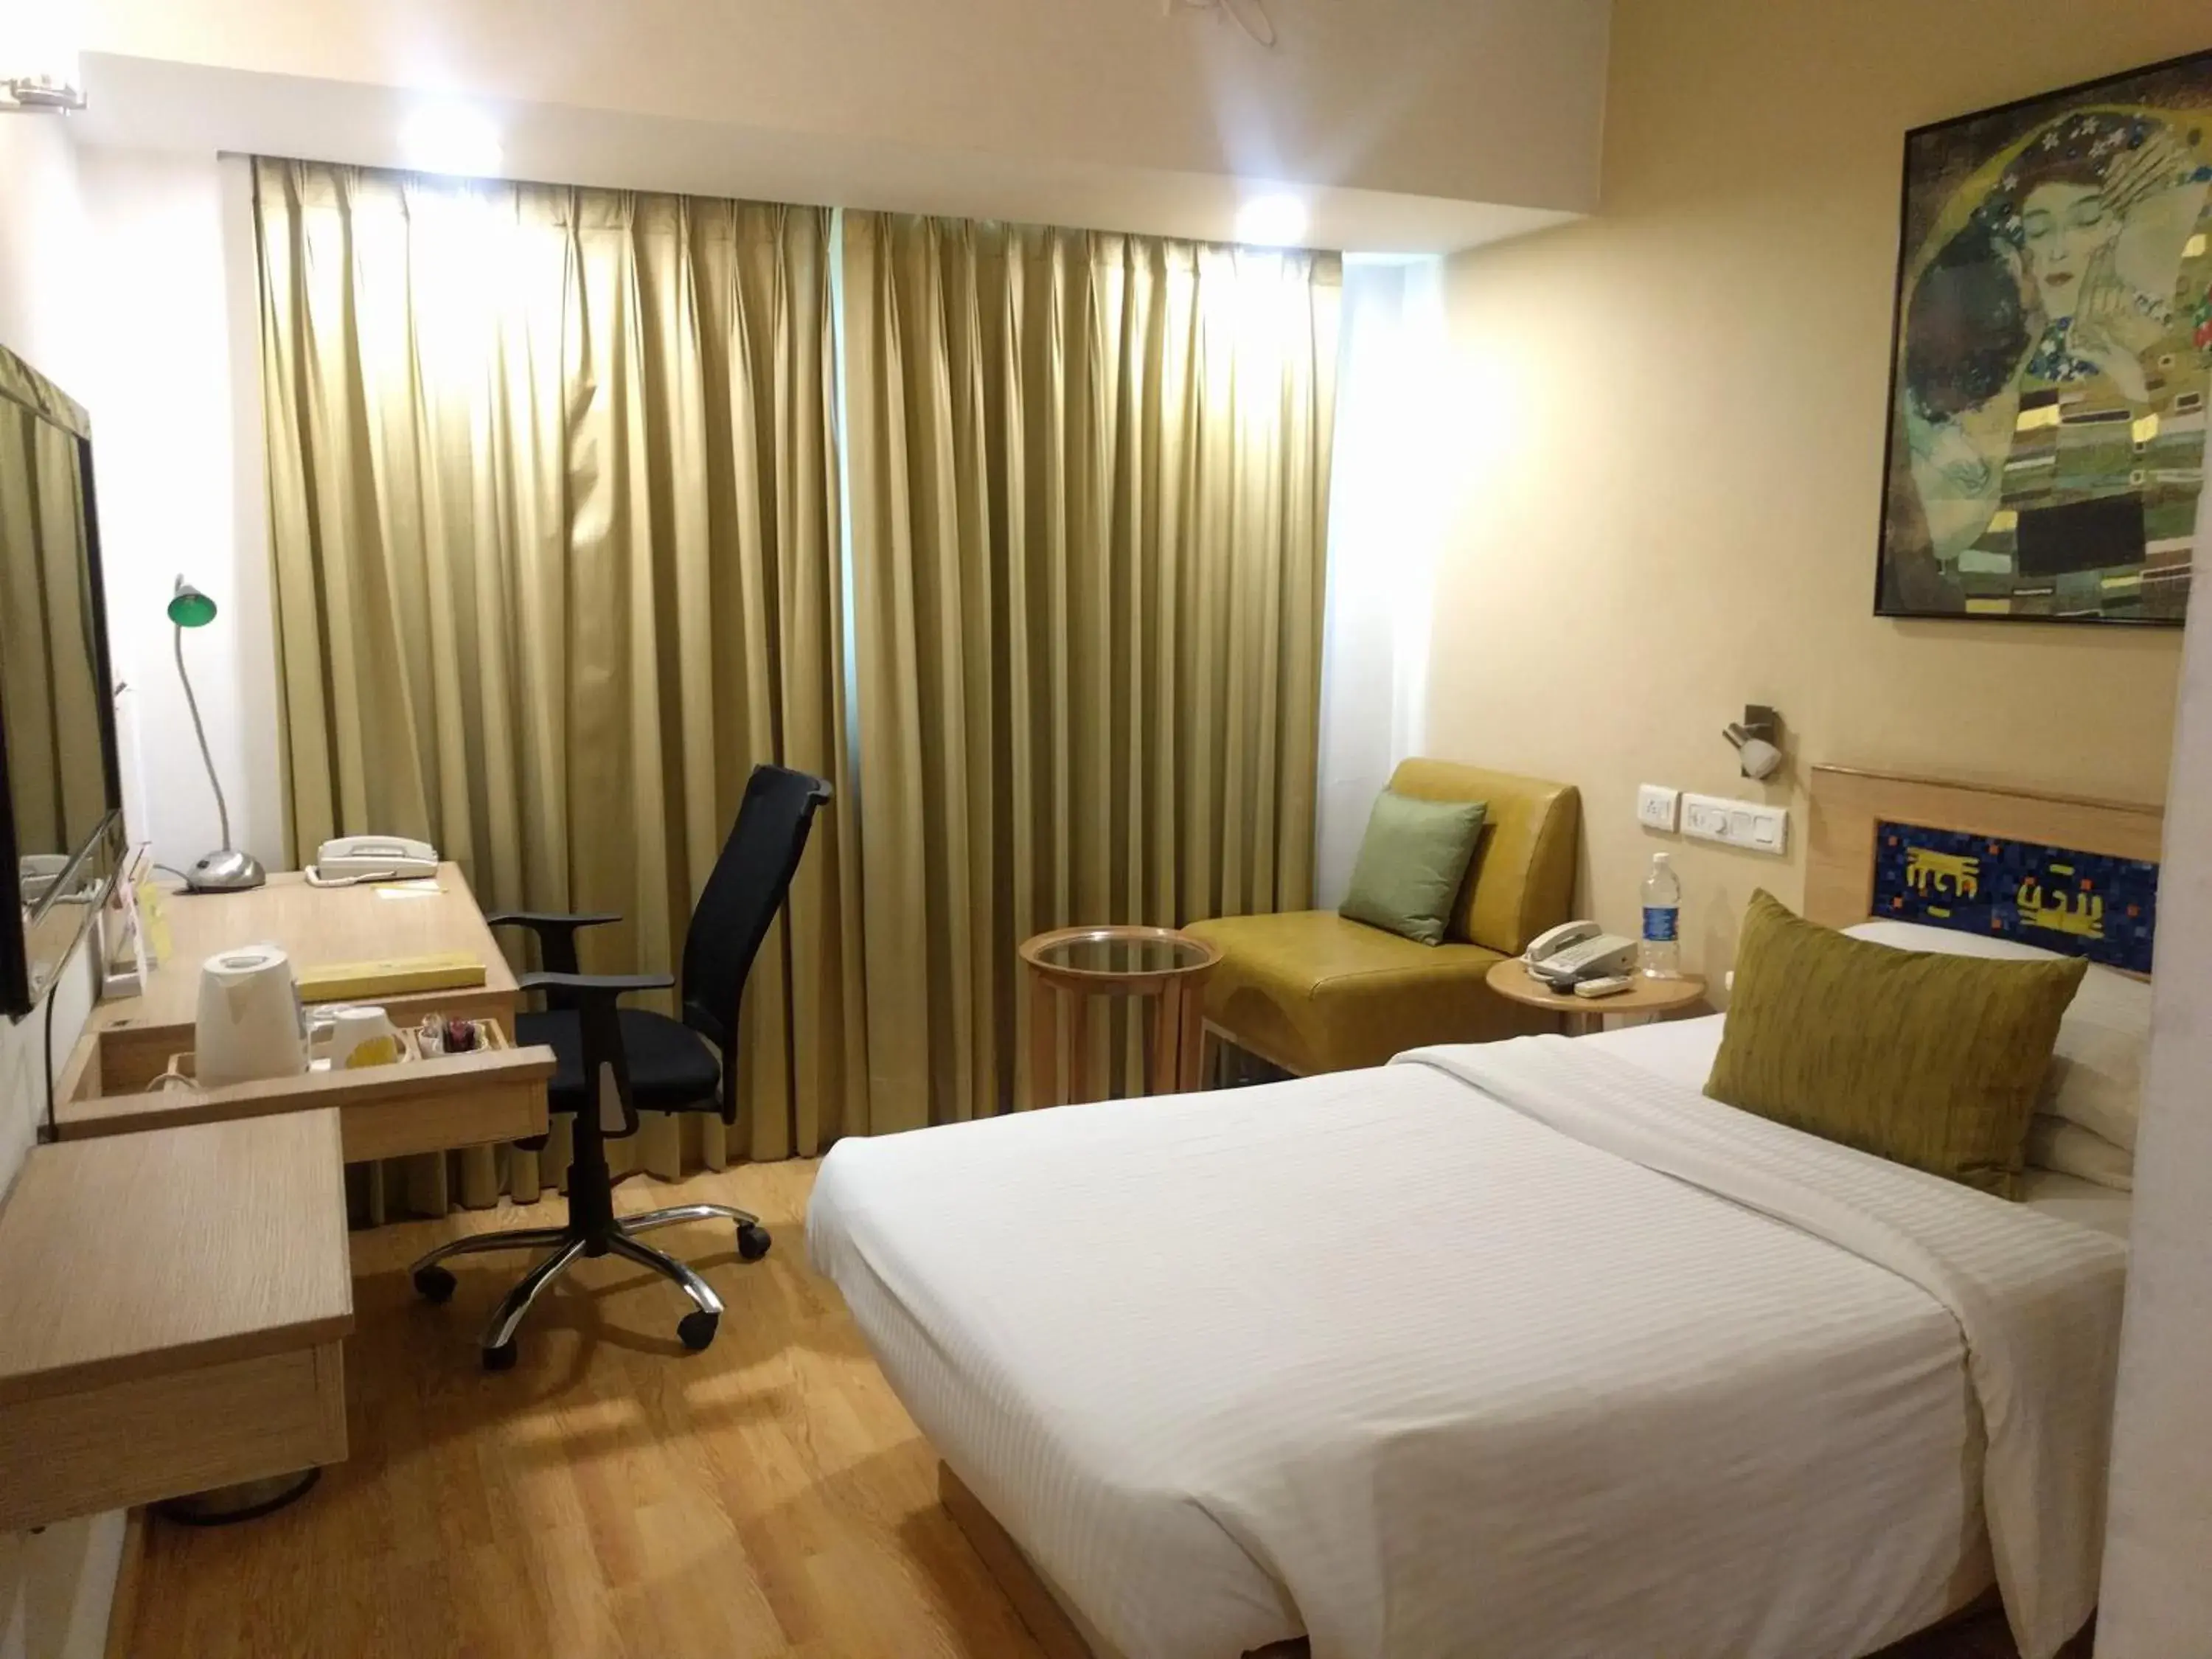 Photo of the whole room in Lemon Tree Hotel, Udyog Vihar, Gurugram